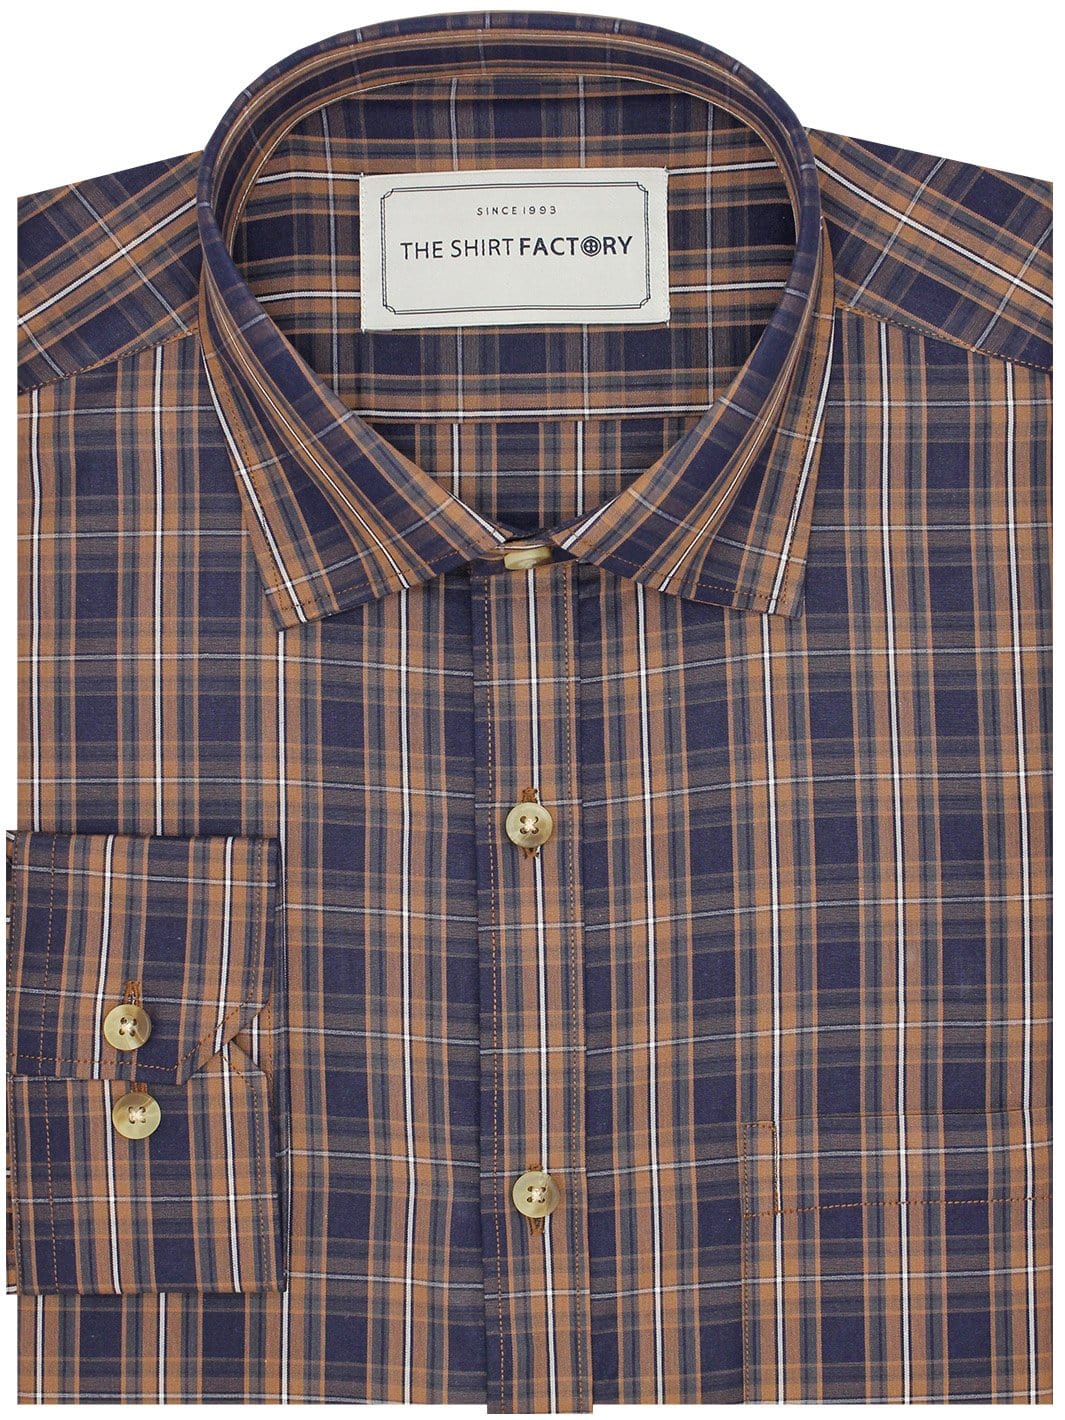 Men's Regular Fit Premium Cotton Shirt